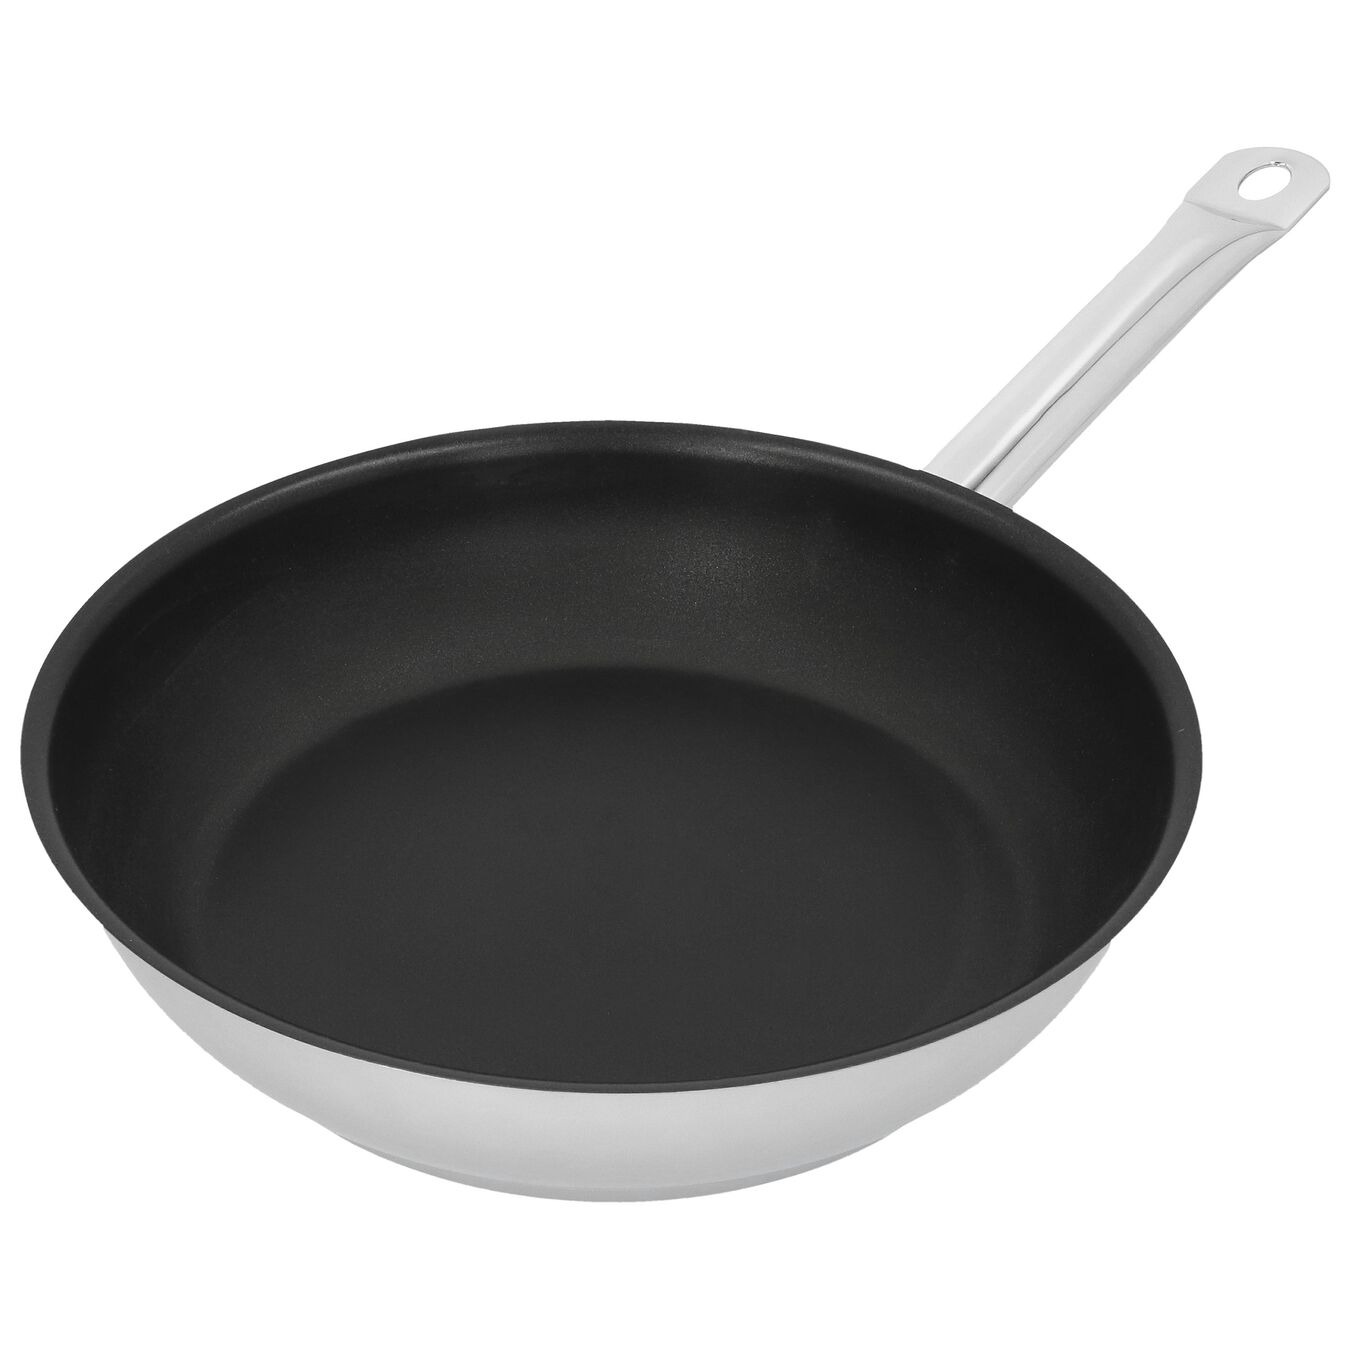 28 cm 18/10 Stainless Steel Frying pan silver-black,,large 5